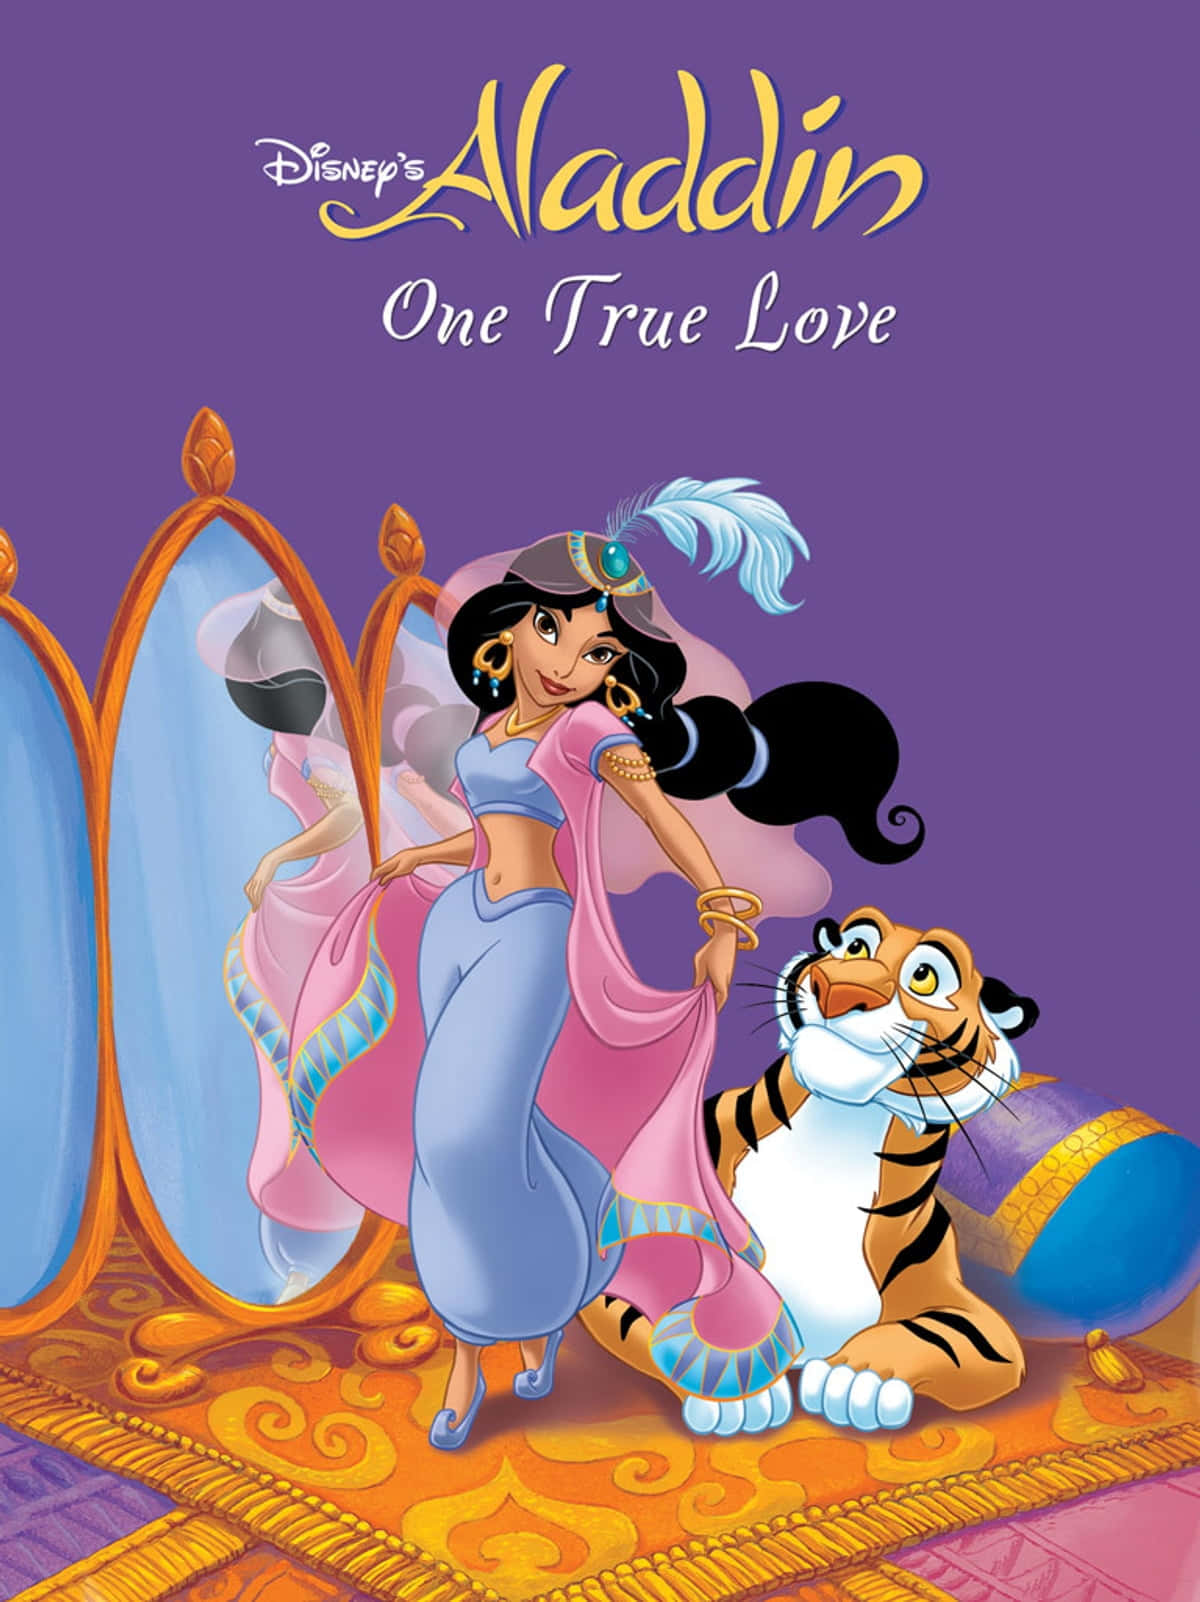 Jasmine and Aladdin on their magical carpet ride!